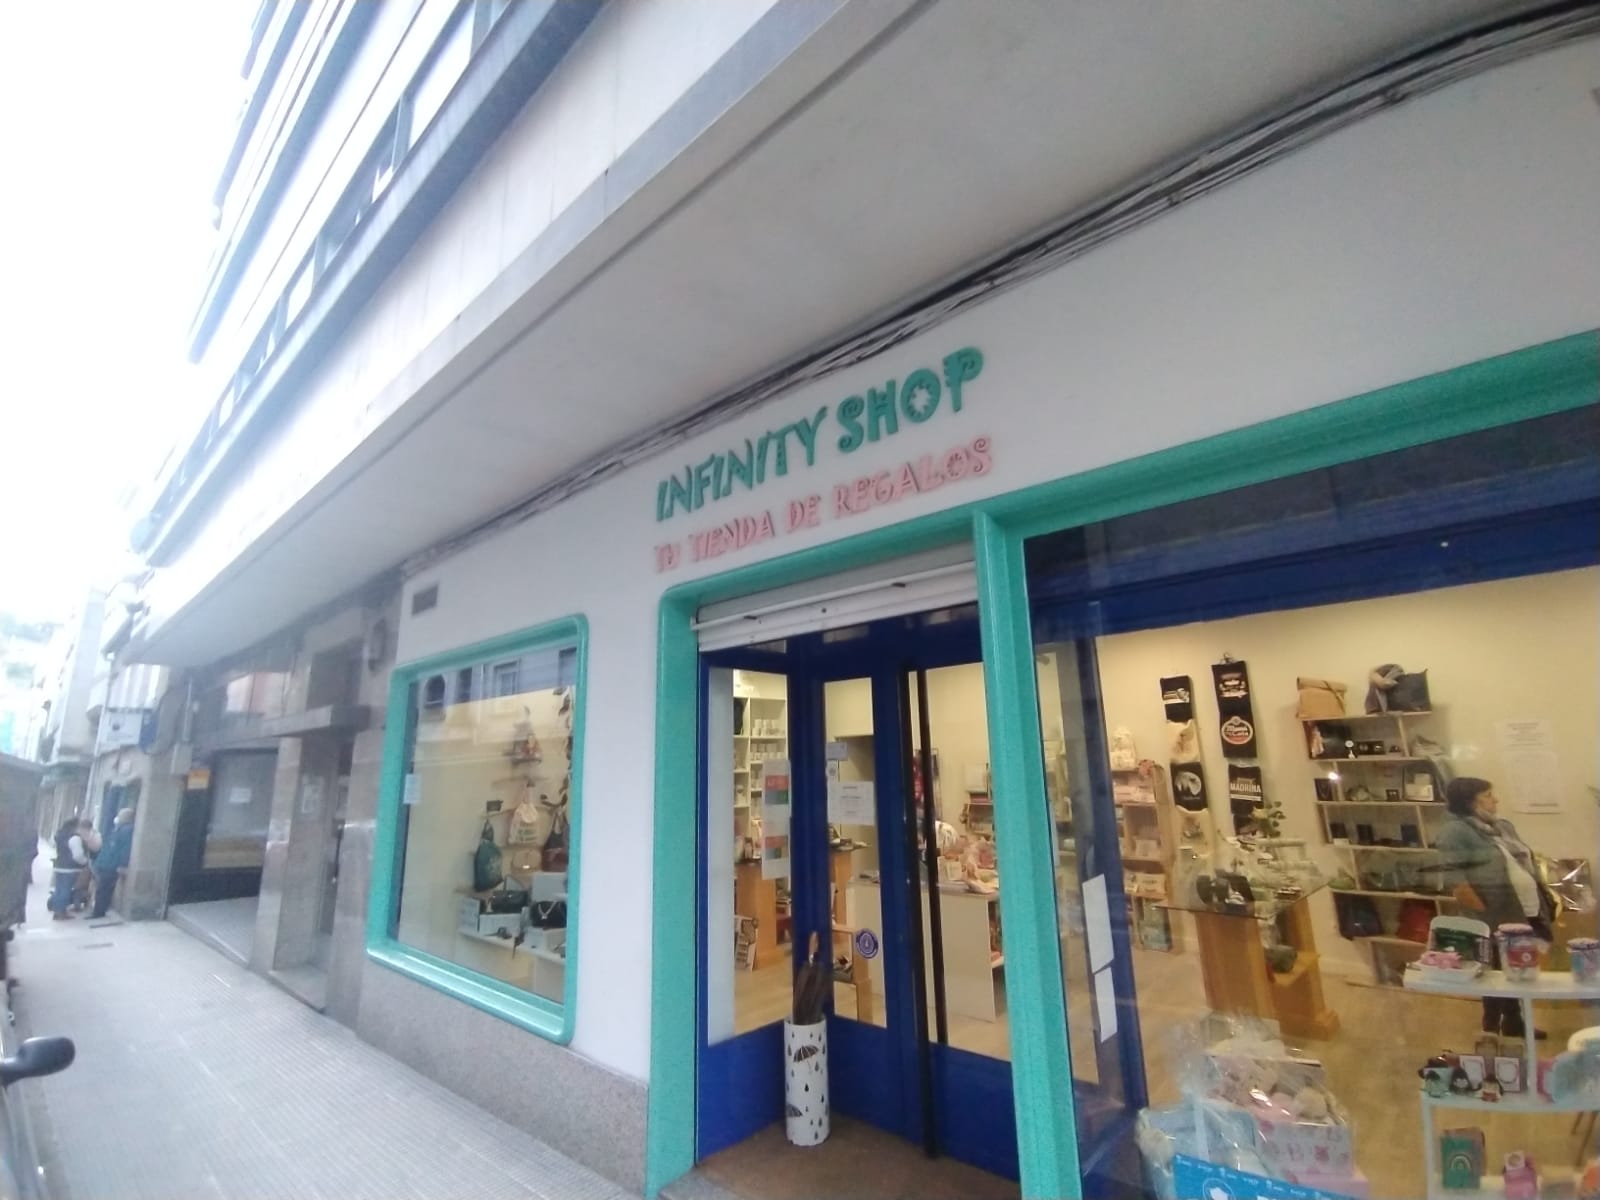 Infinity Shop